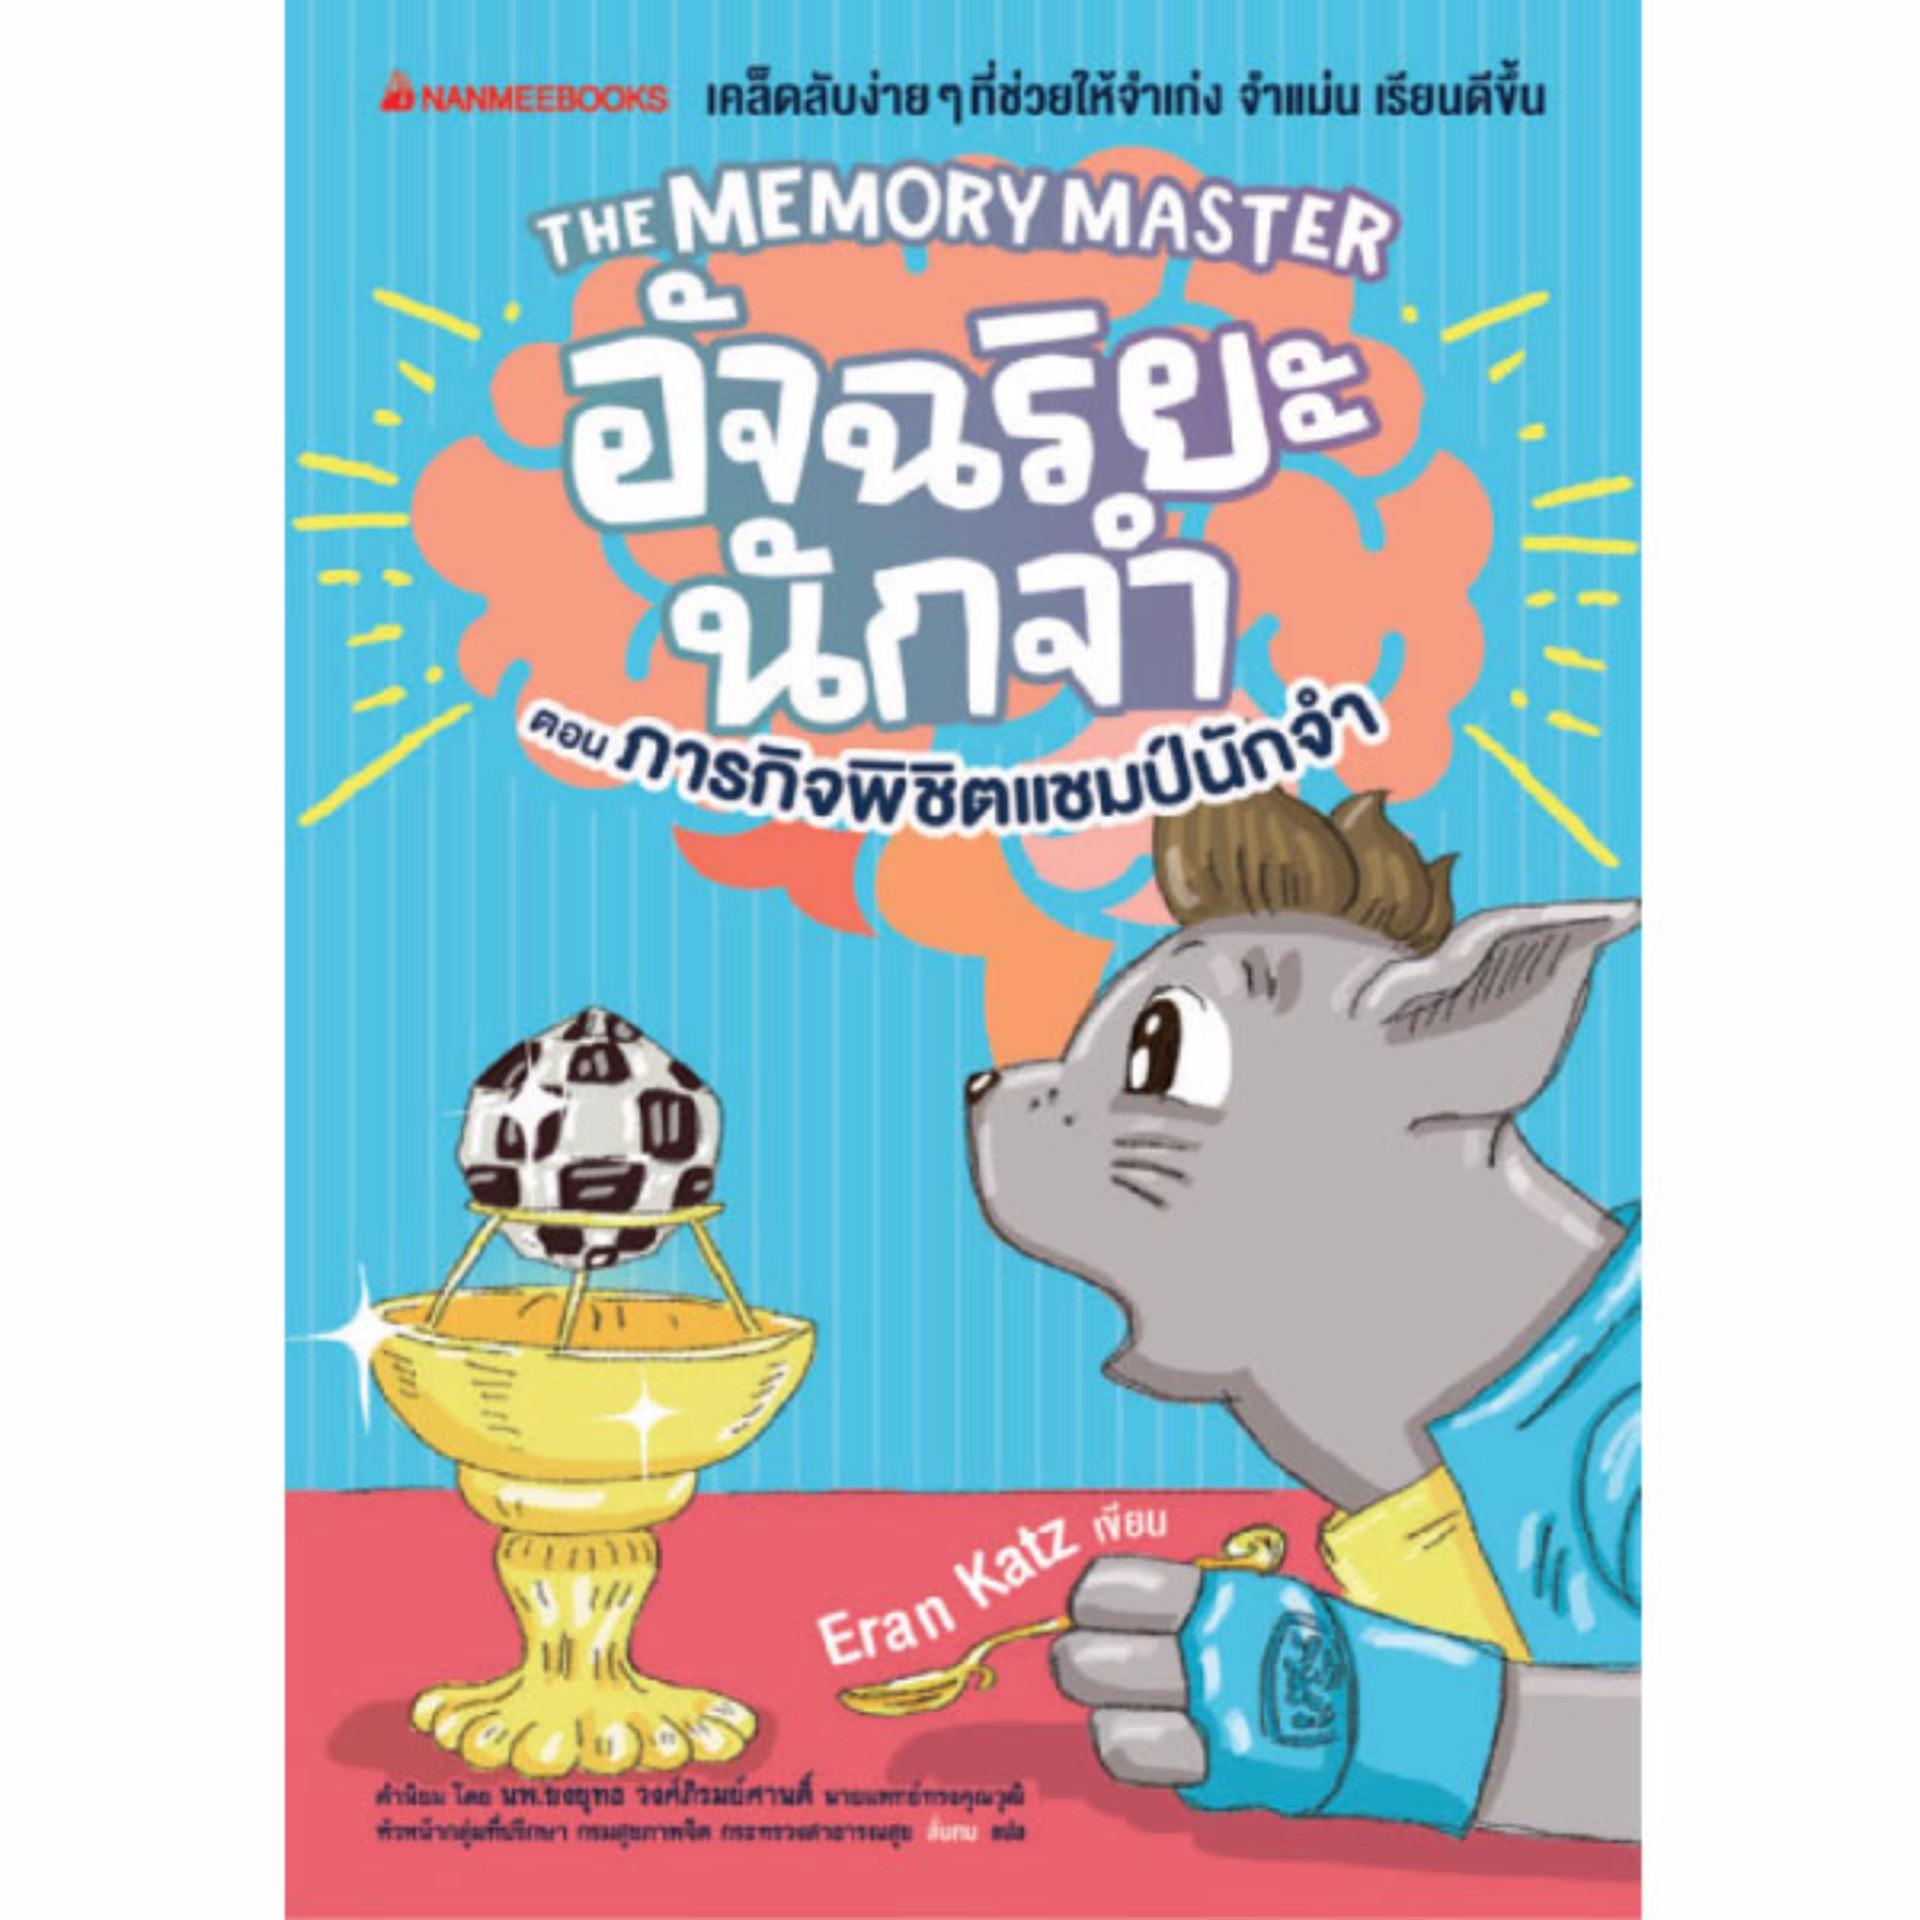 Nanmeebooks หนังสือ The Memory Master อัจฉริยะนักจำ ตอน ภารกิจพิชิตแชมป์นักจำ